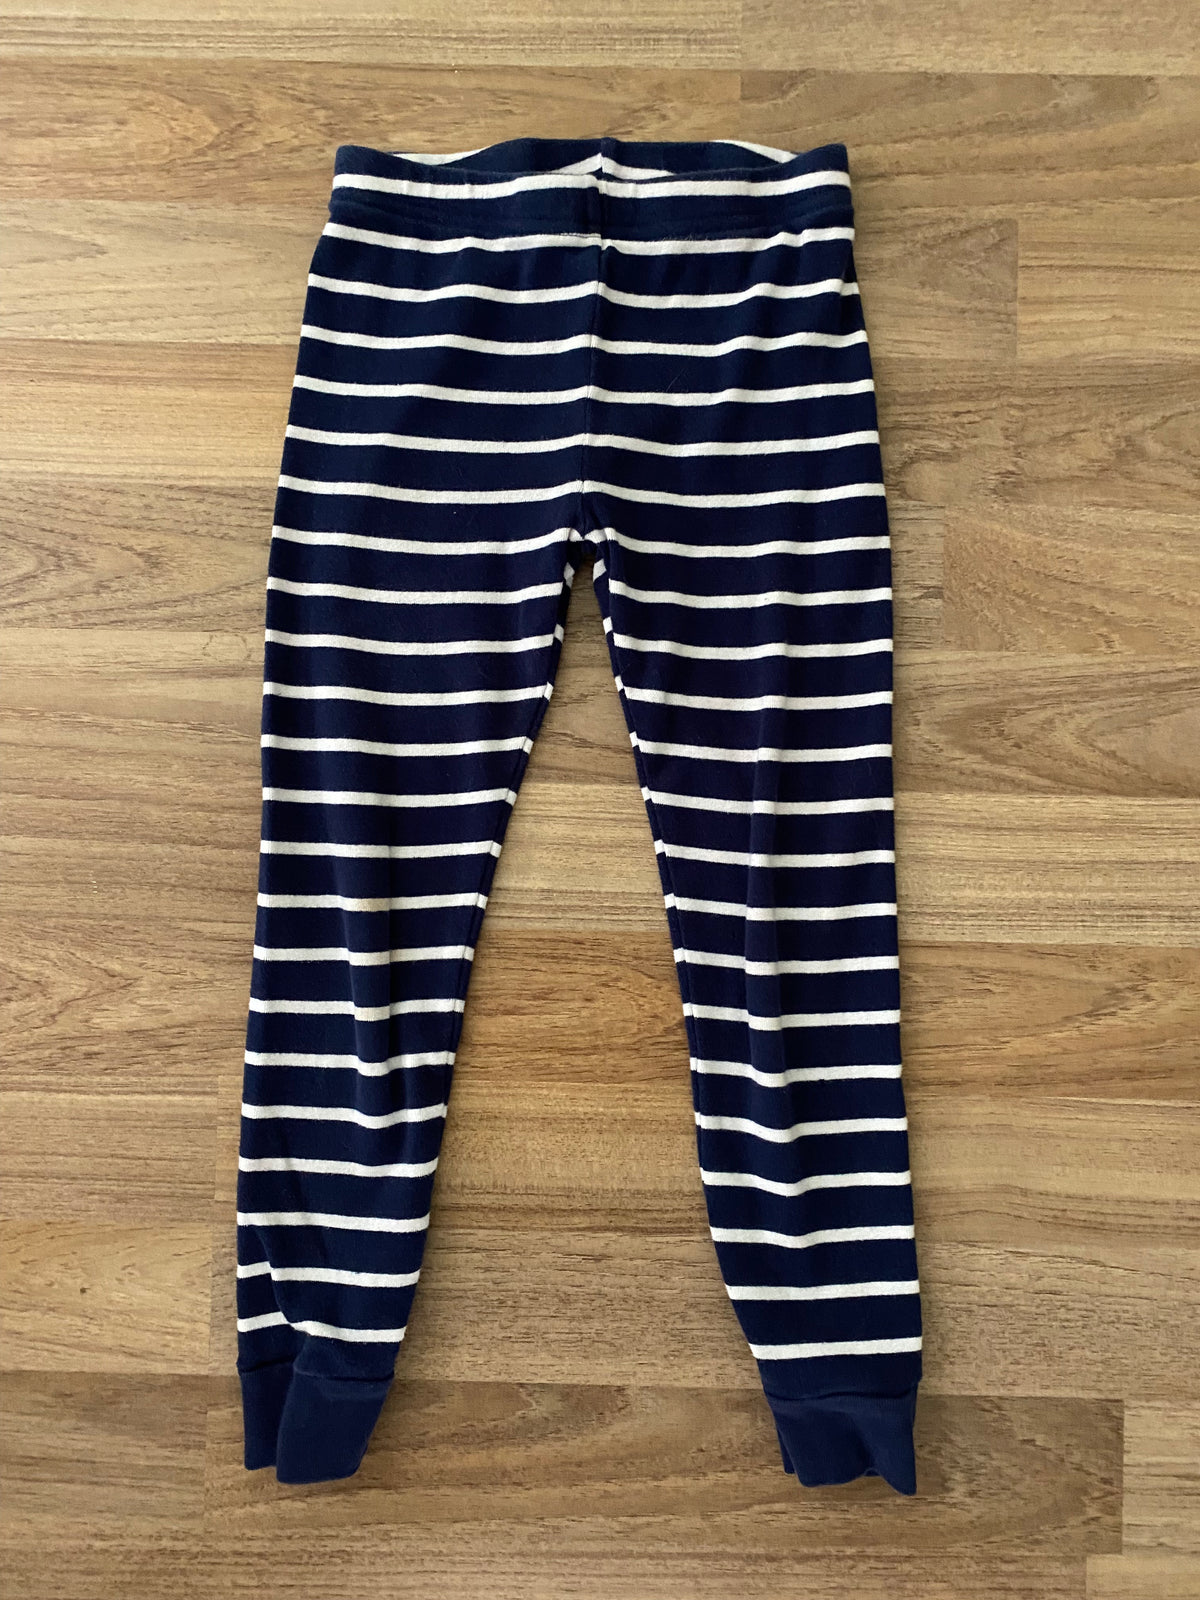 Pajama Pants (Boys Size 5)